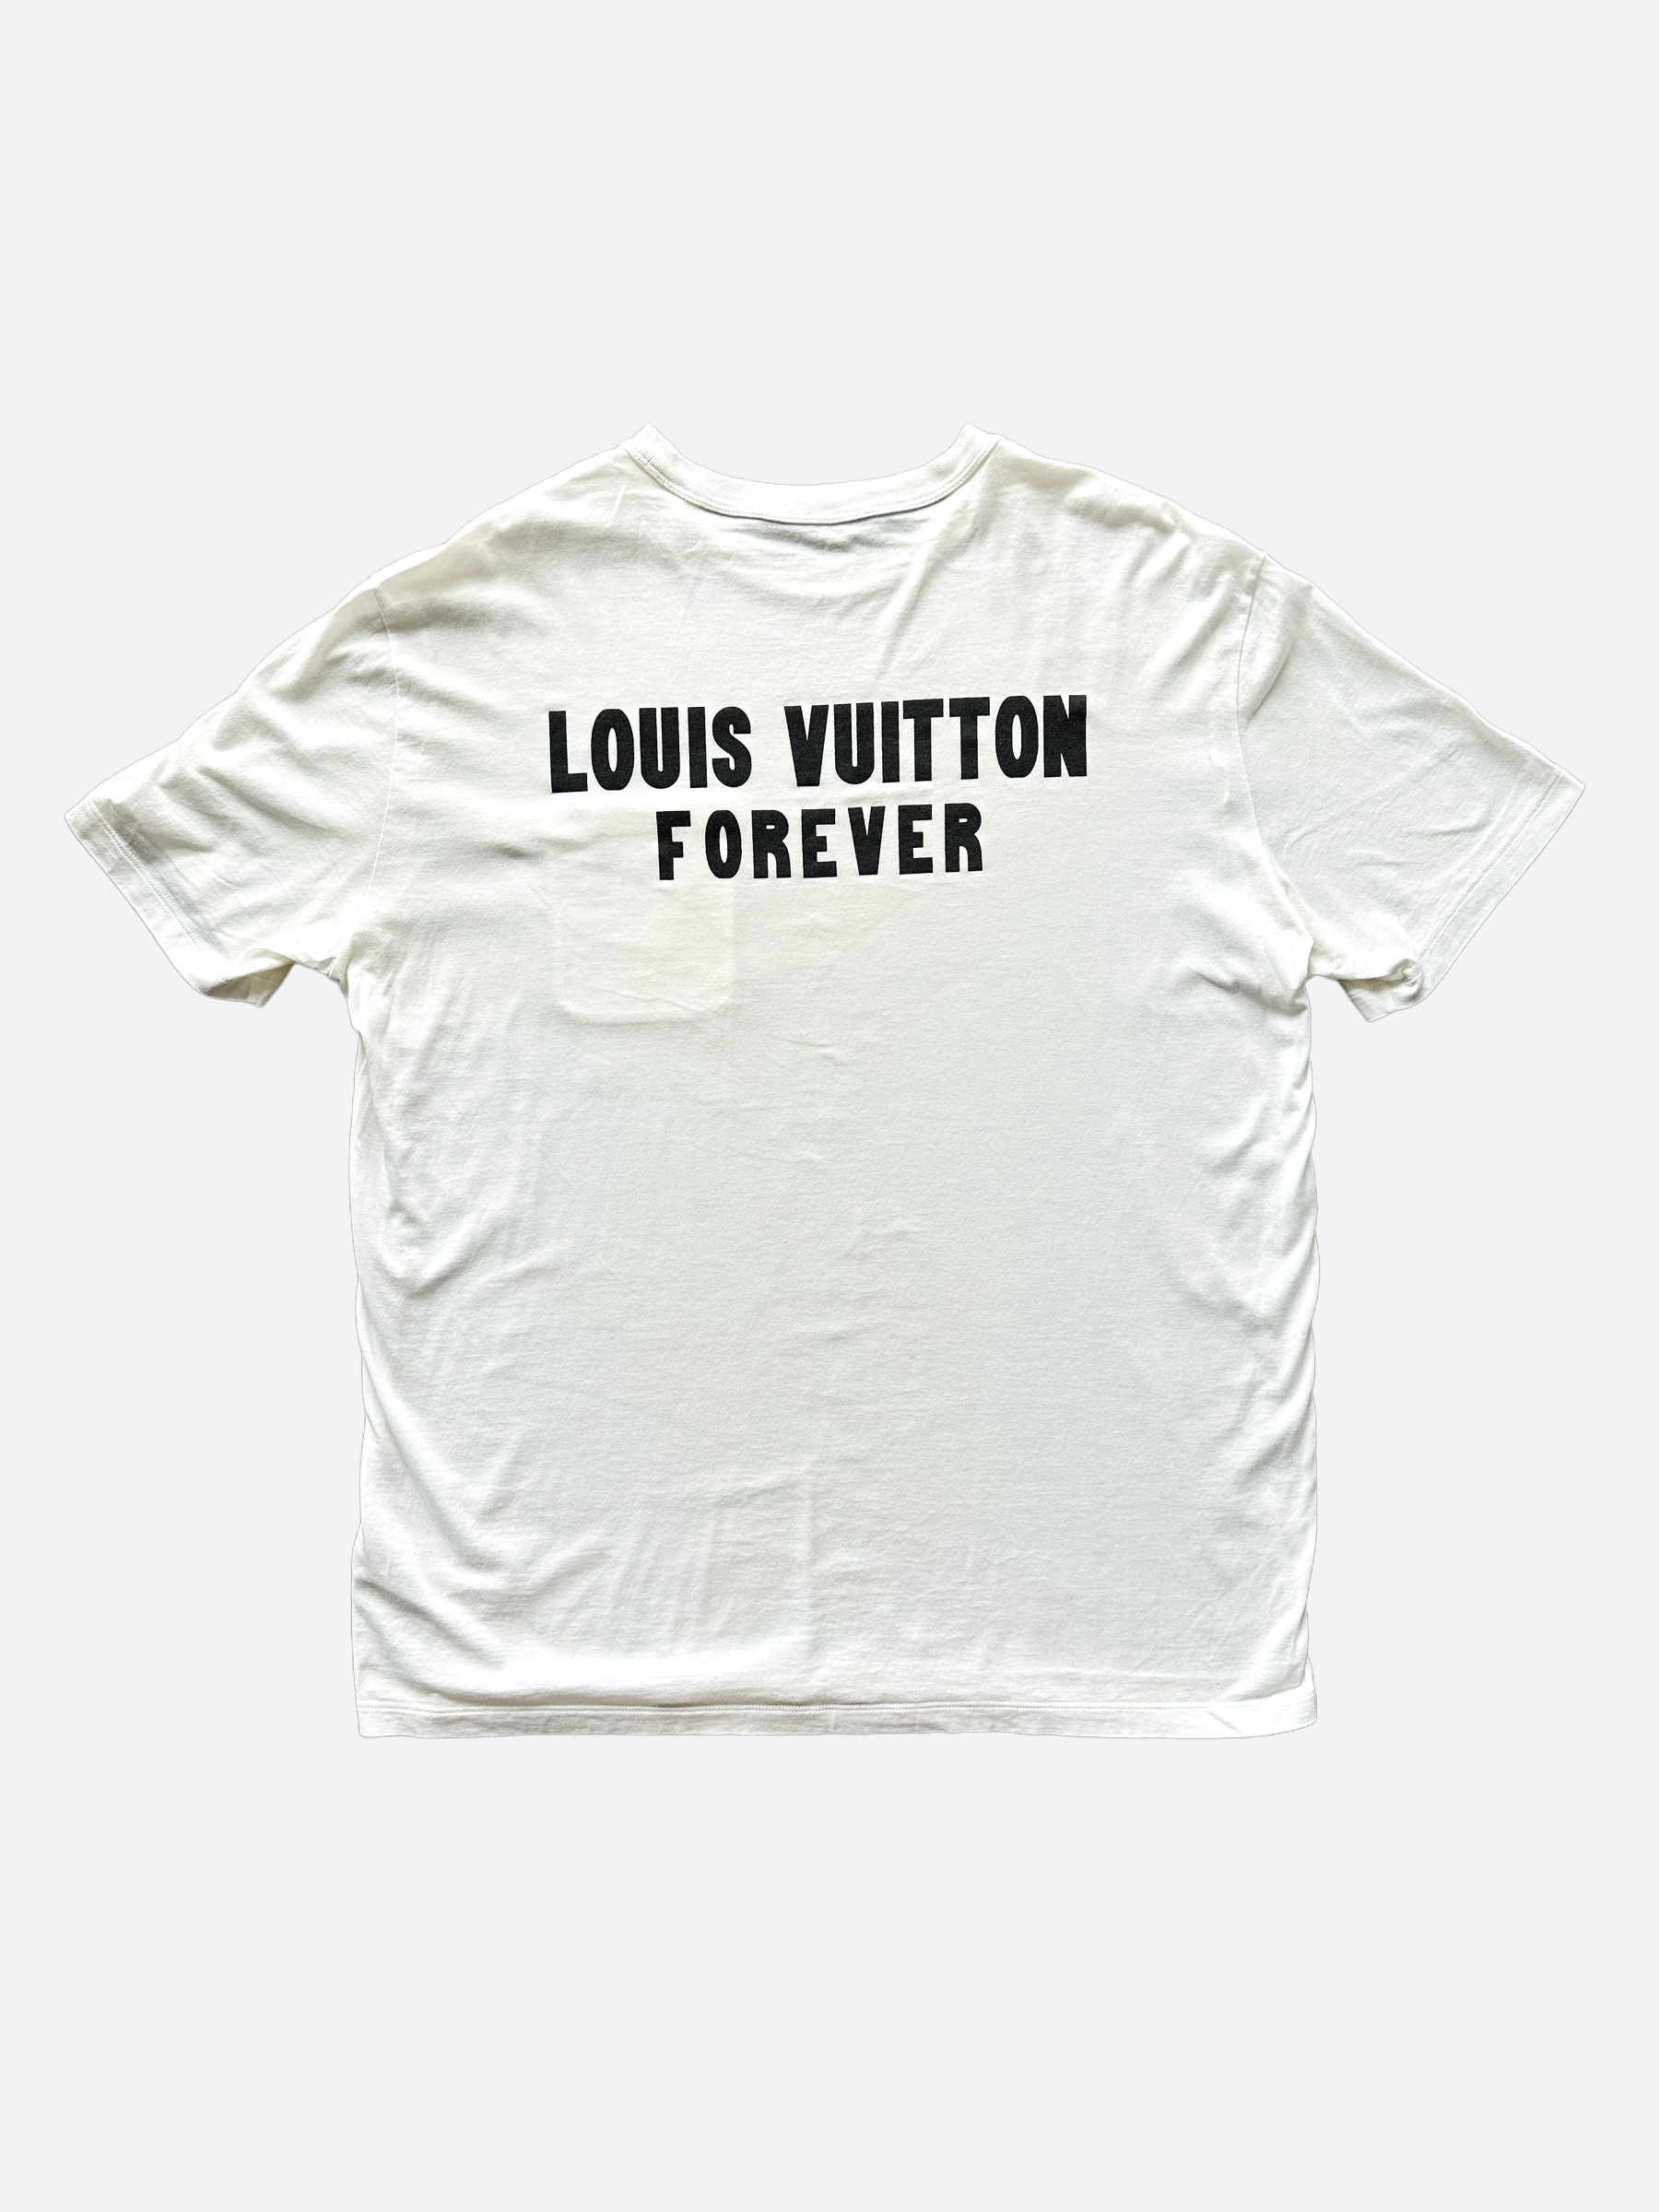 Louis Vuitton Forever T Shirts For Men